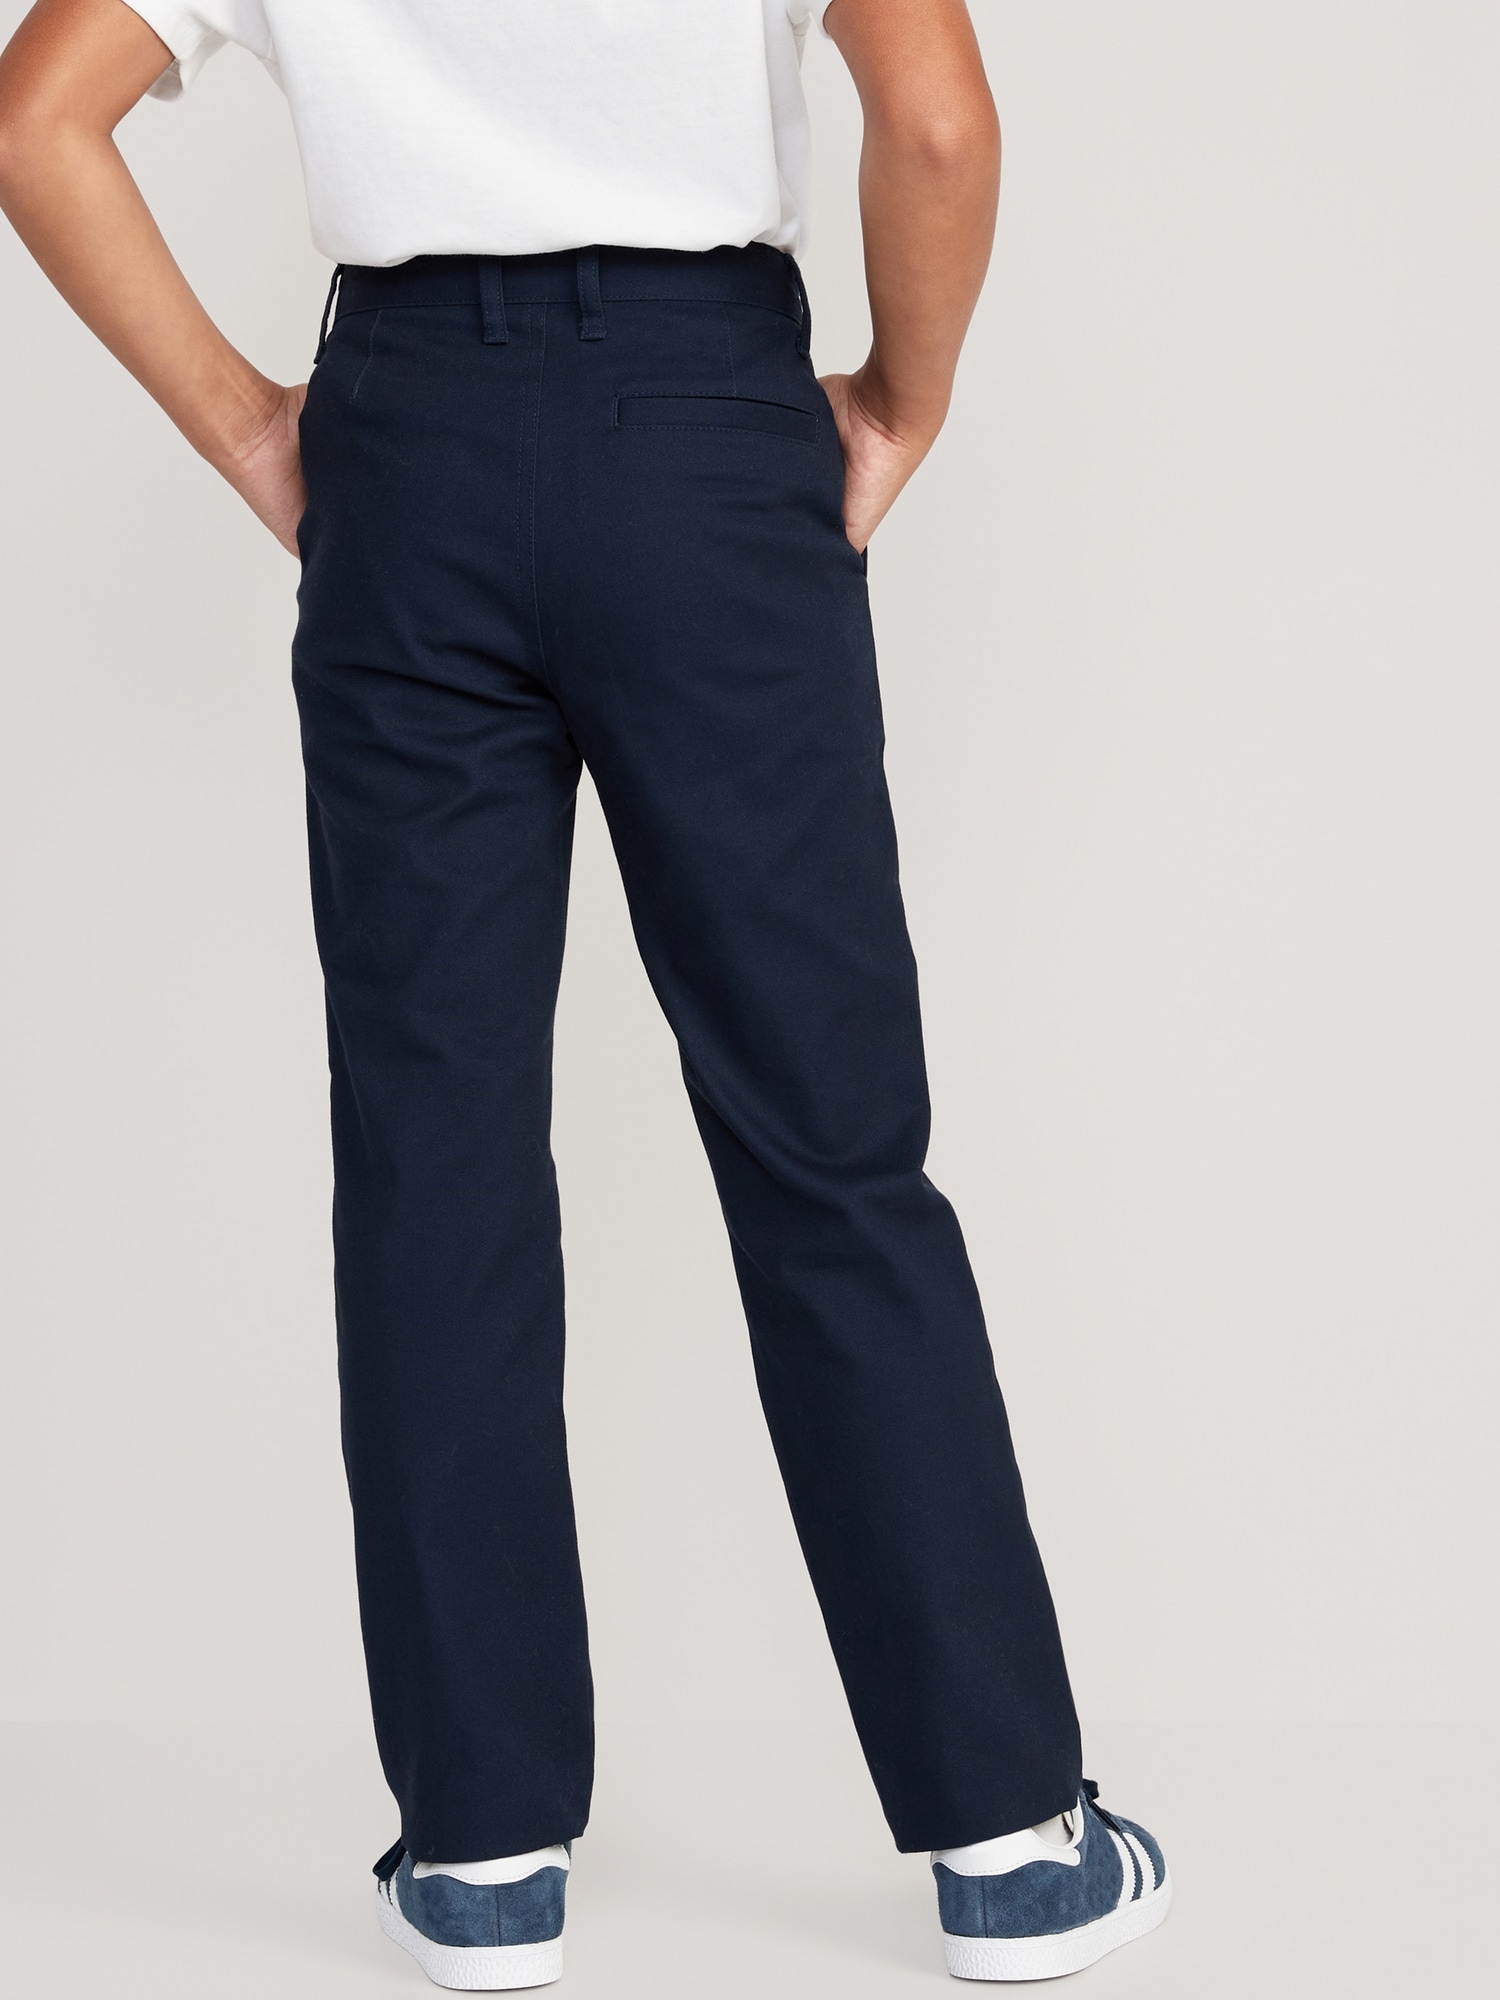 Women's Trendy Skinny 5 Pocket Stretch Uniform Pants | Fruugo ZA